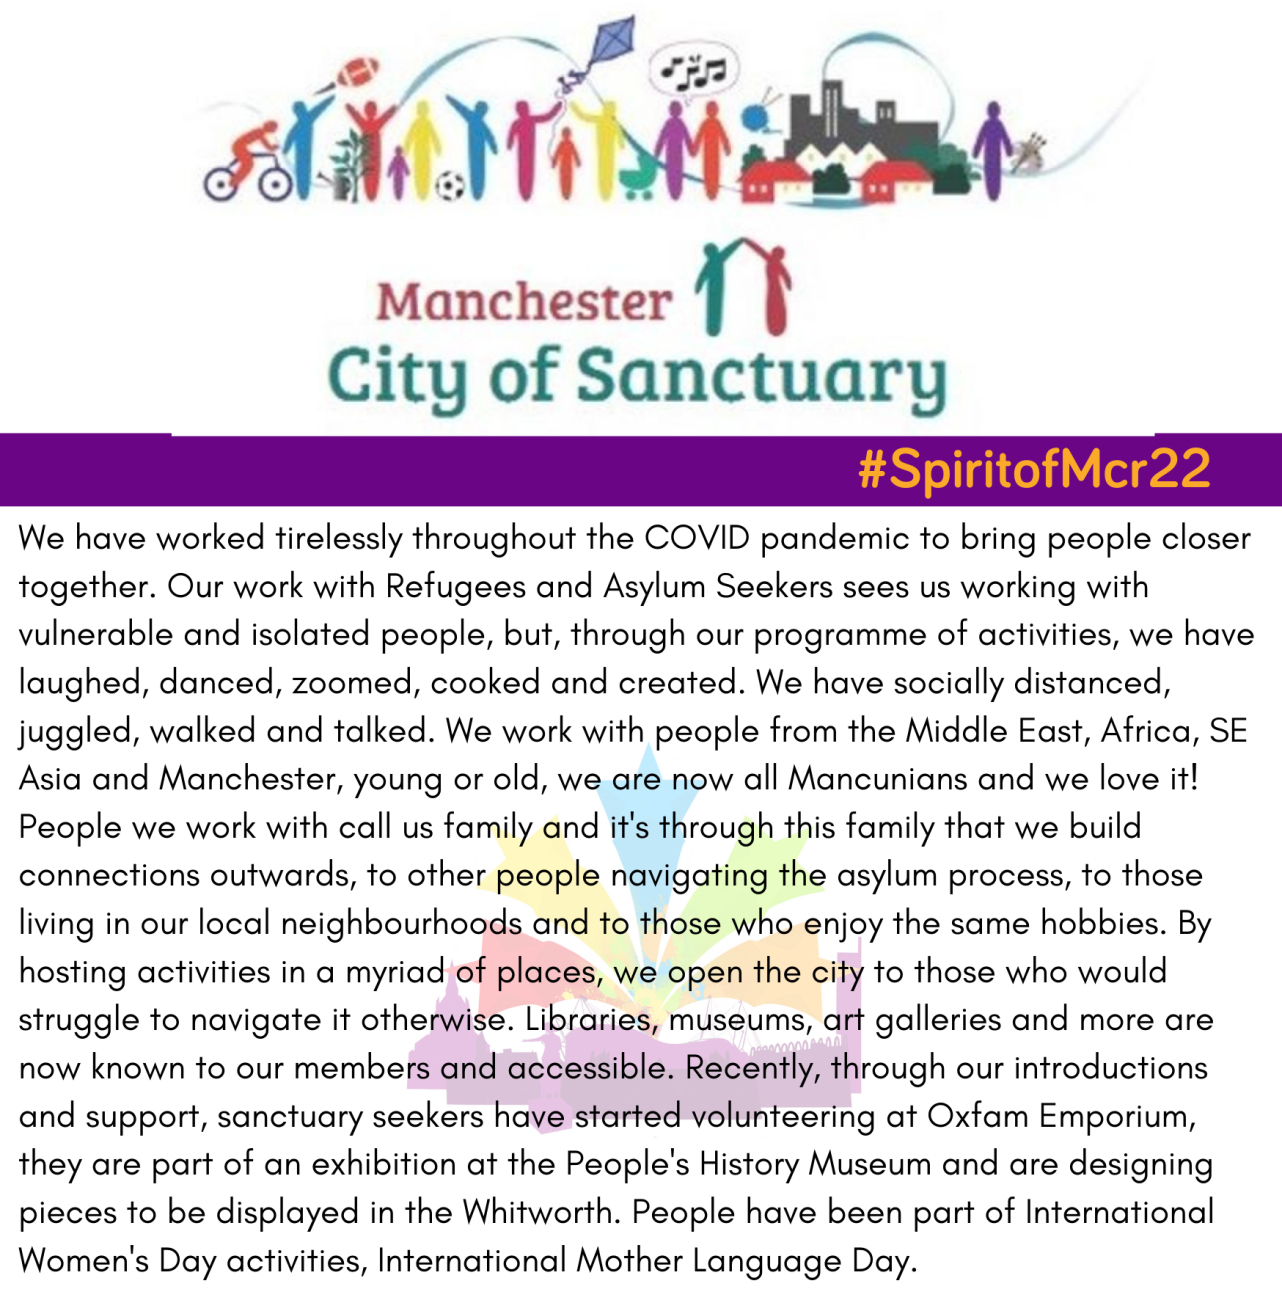 Manchester City of Sanctuary